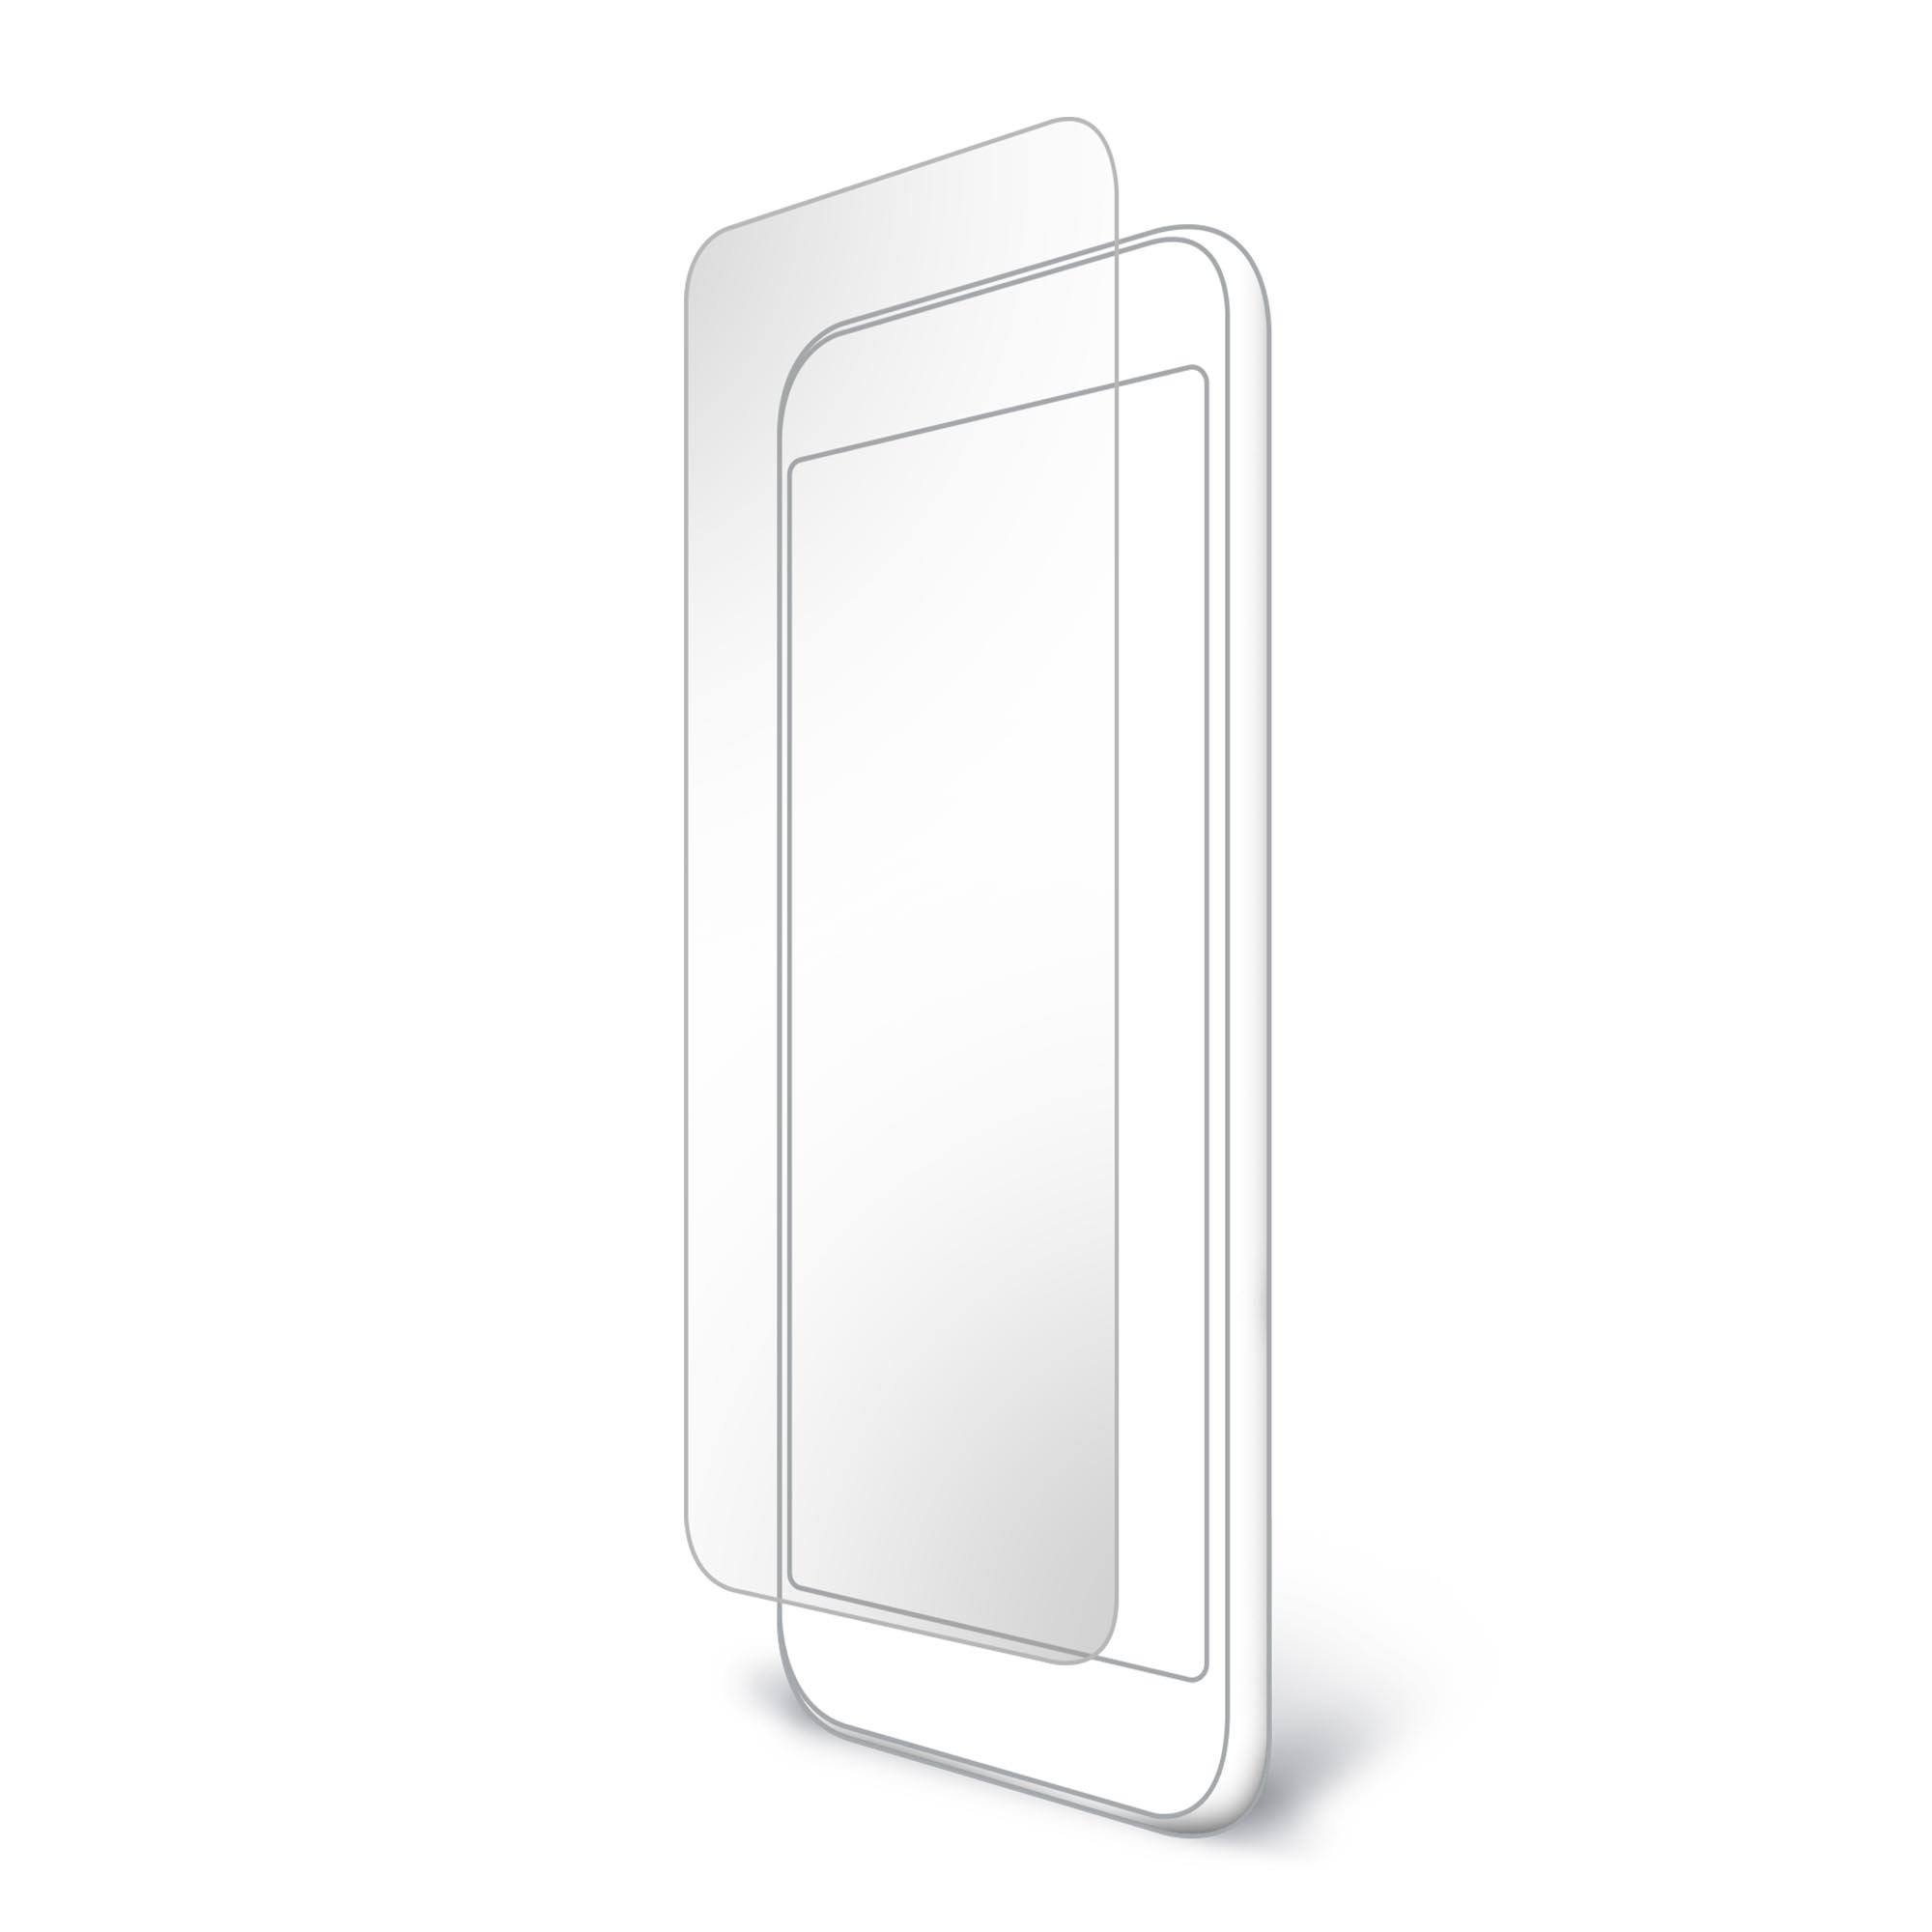 Risio 3 LG Risio 3 Screen Protectors, Cases & Skins | BodyGuardz®